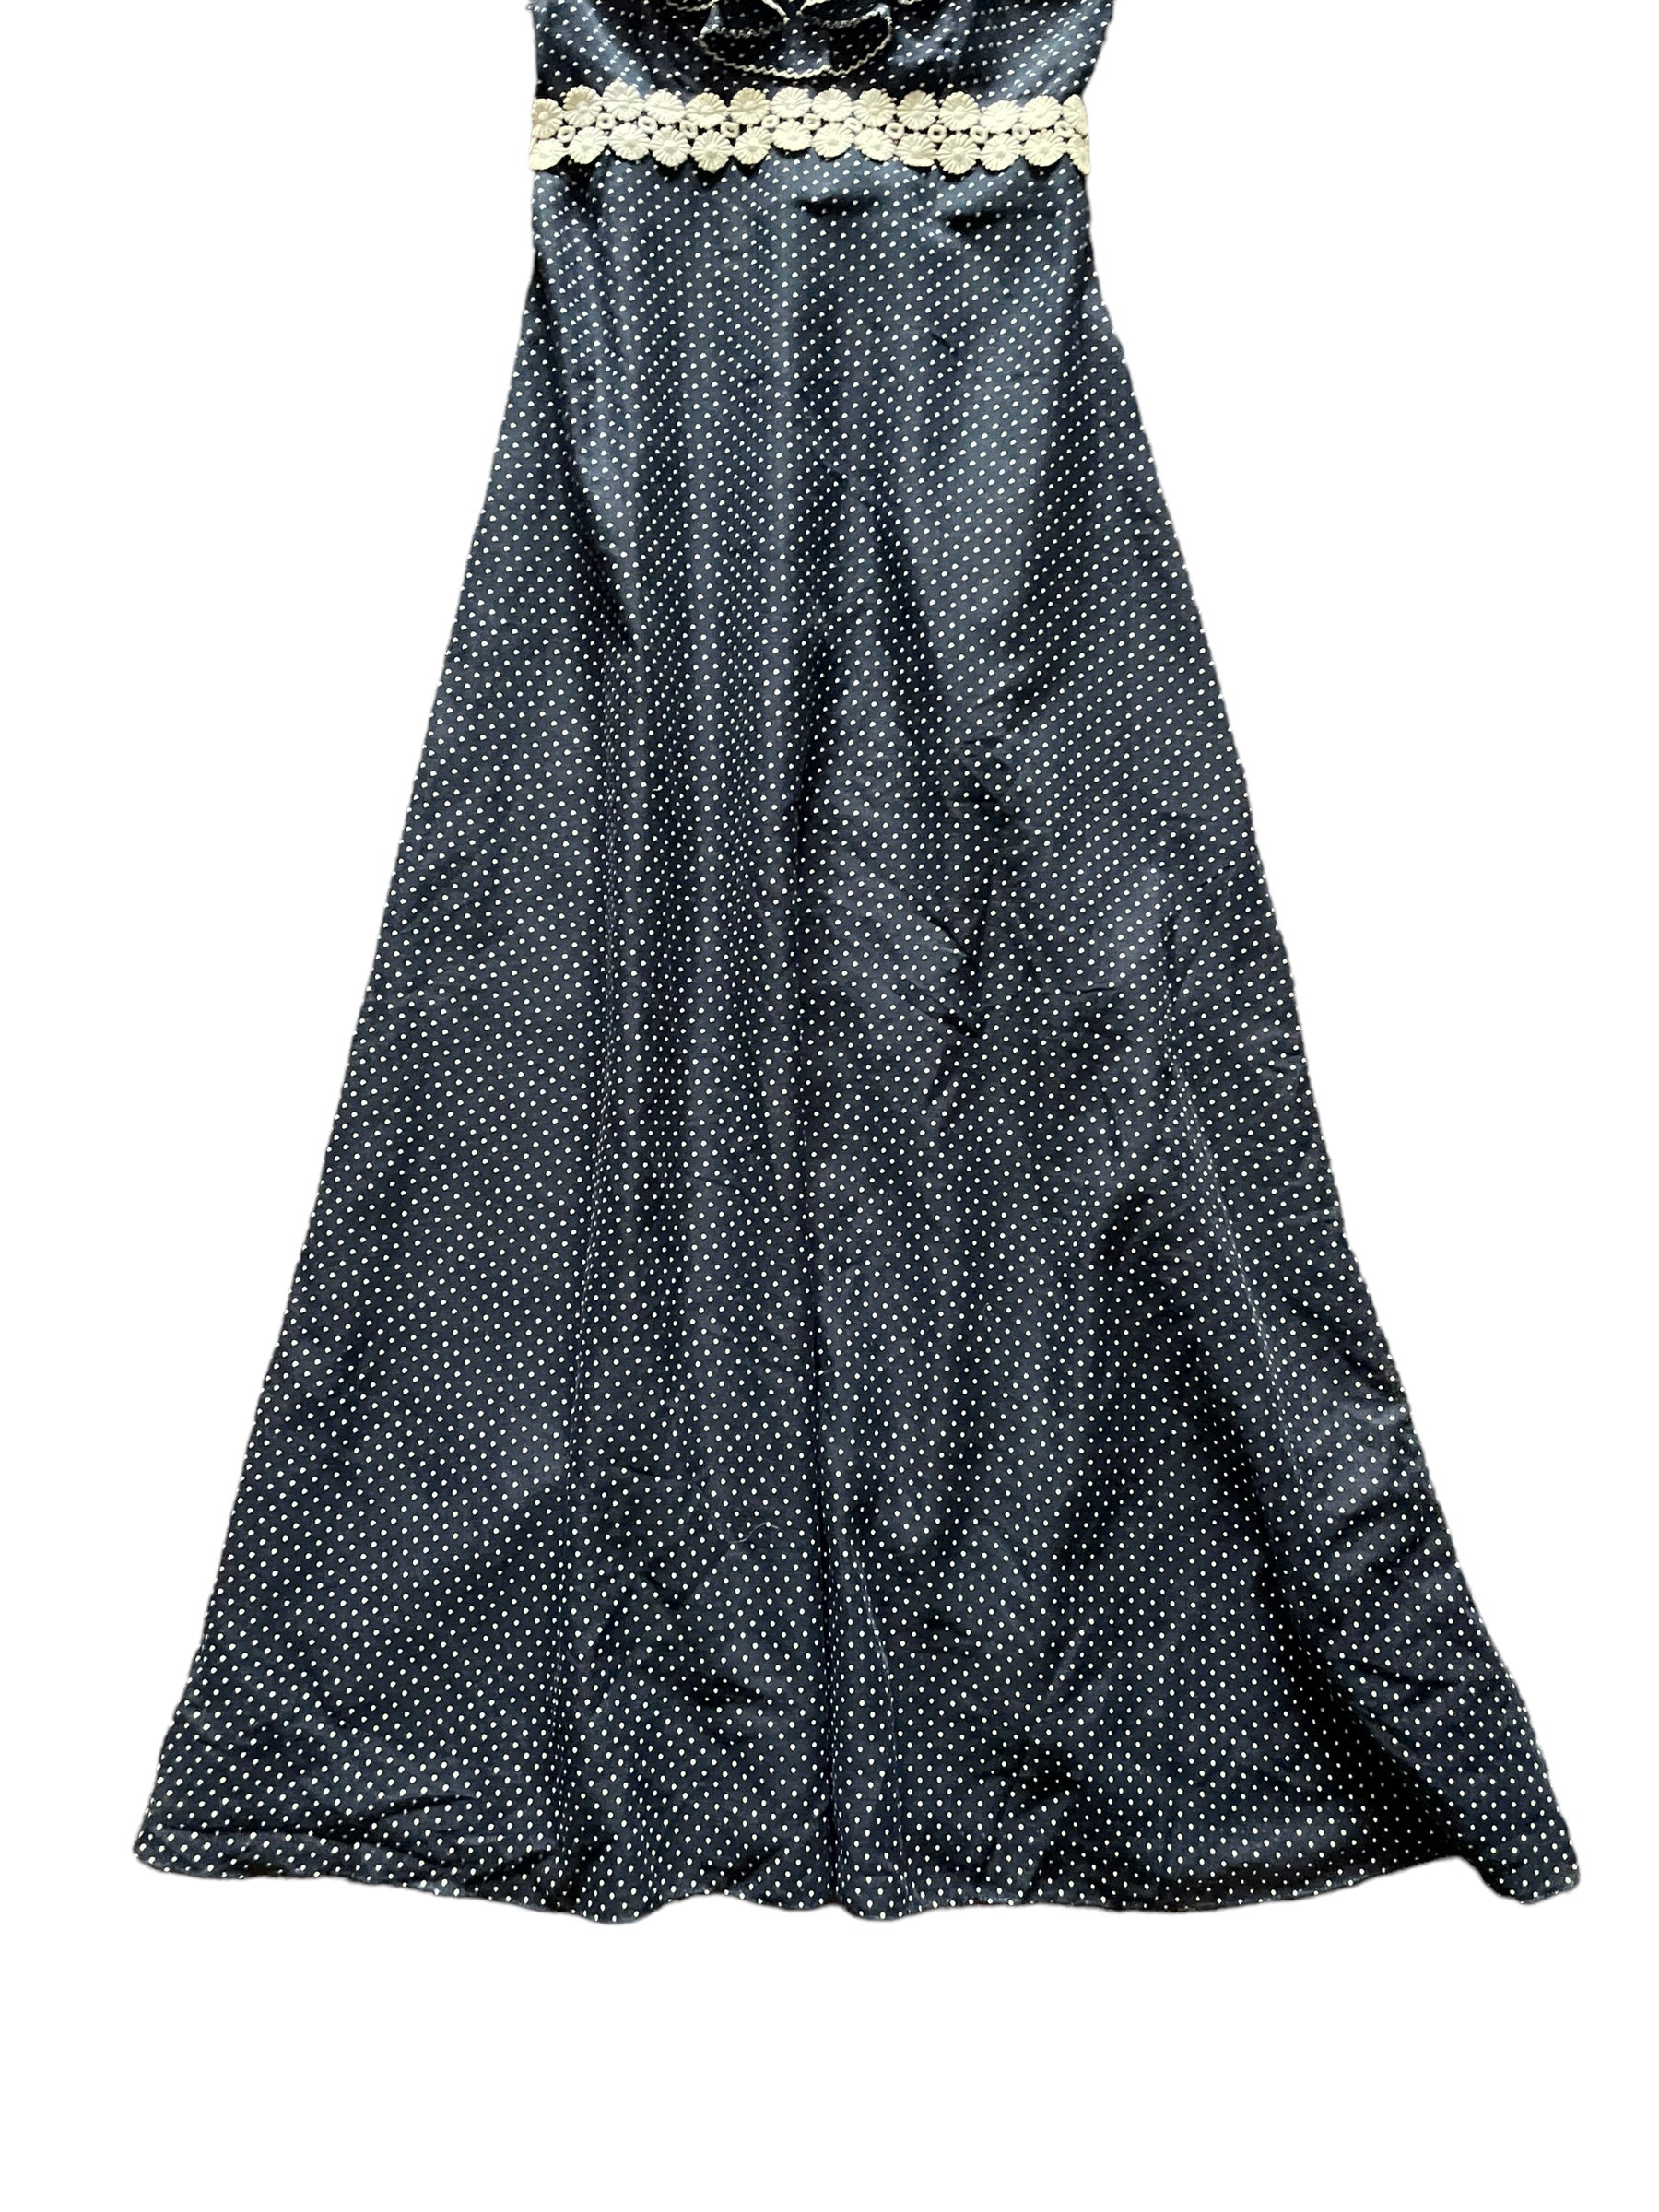 Front skirt view of Vintage 1970s Navy Blue Swiss Dot Maxi Dress SZ S |  Barn Owl Vintage Dresses | Seattle True Vintage